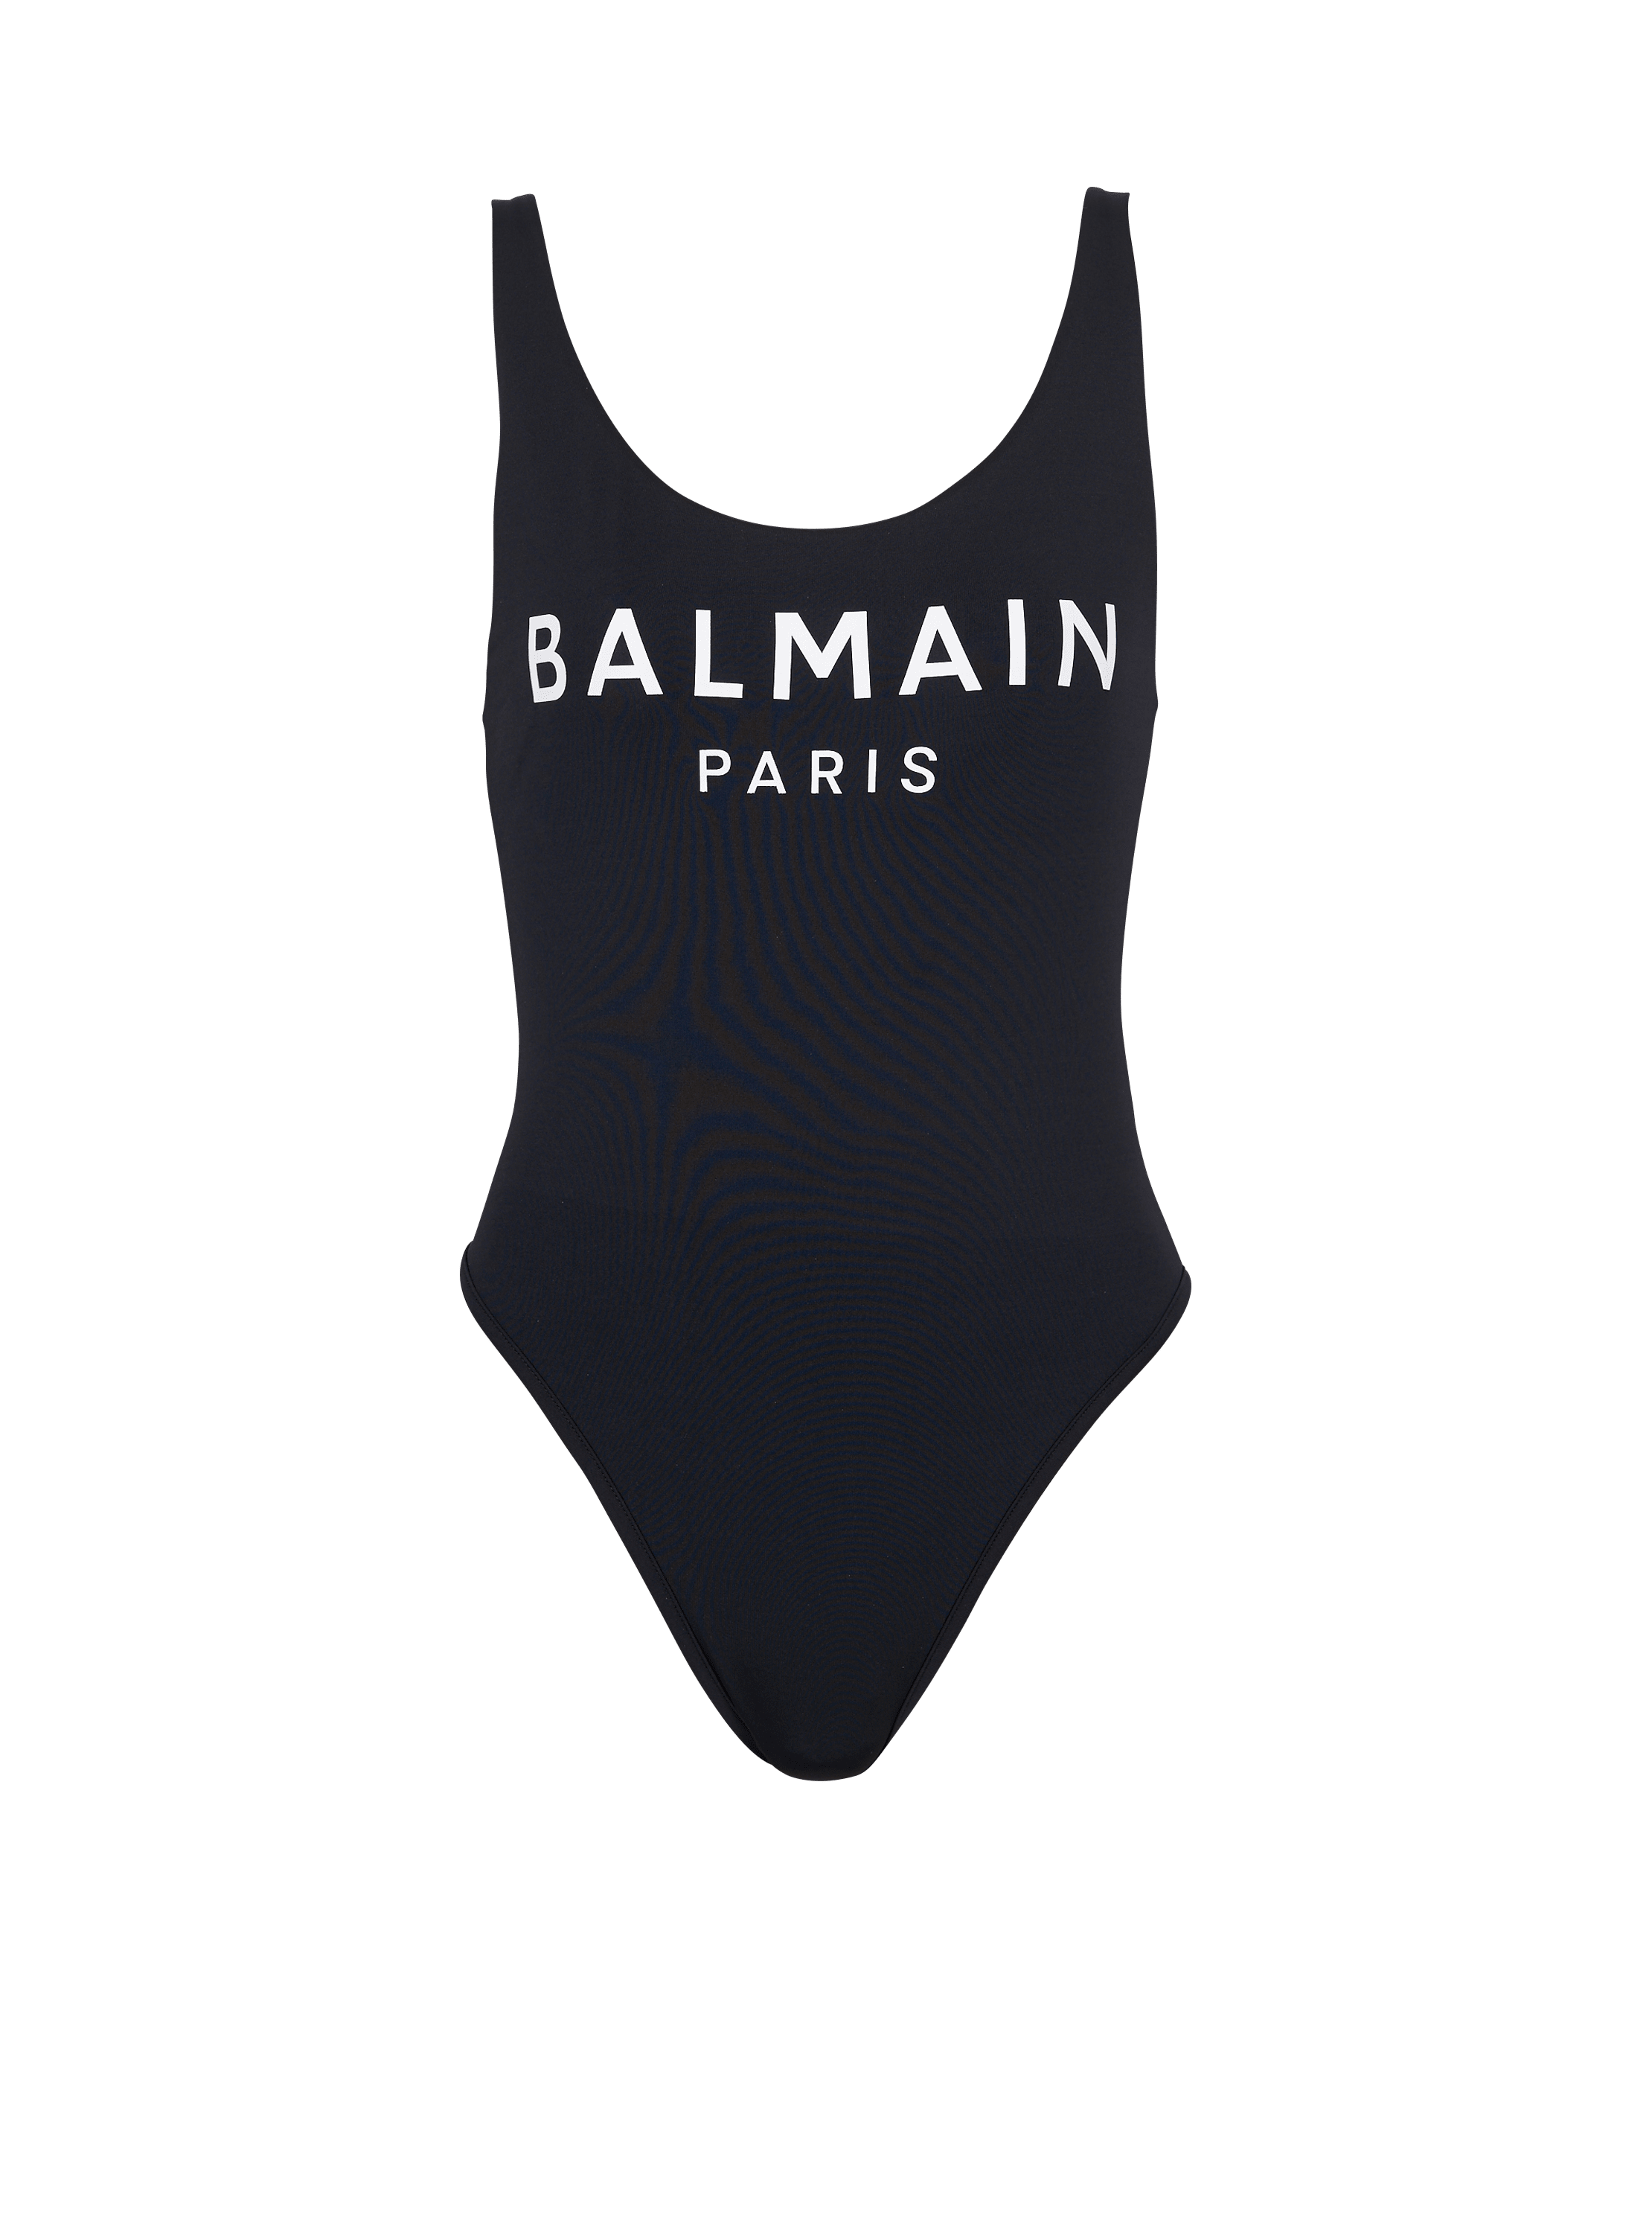 Balmain Paris swimsuit, black, hi-res